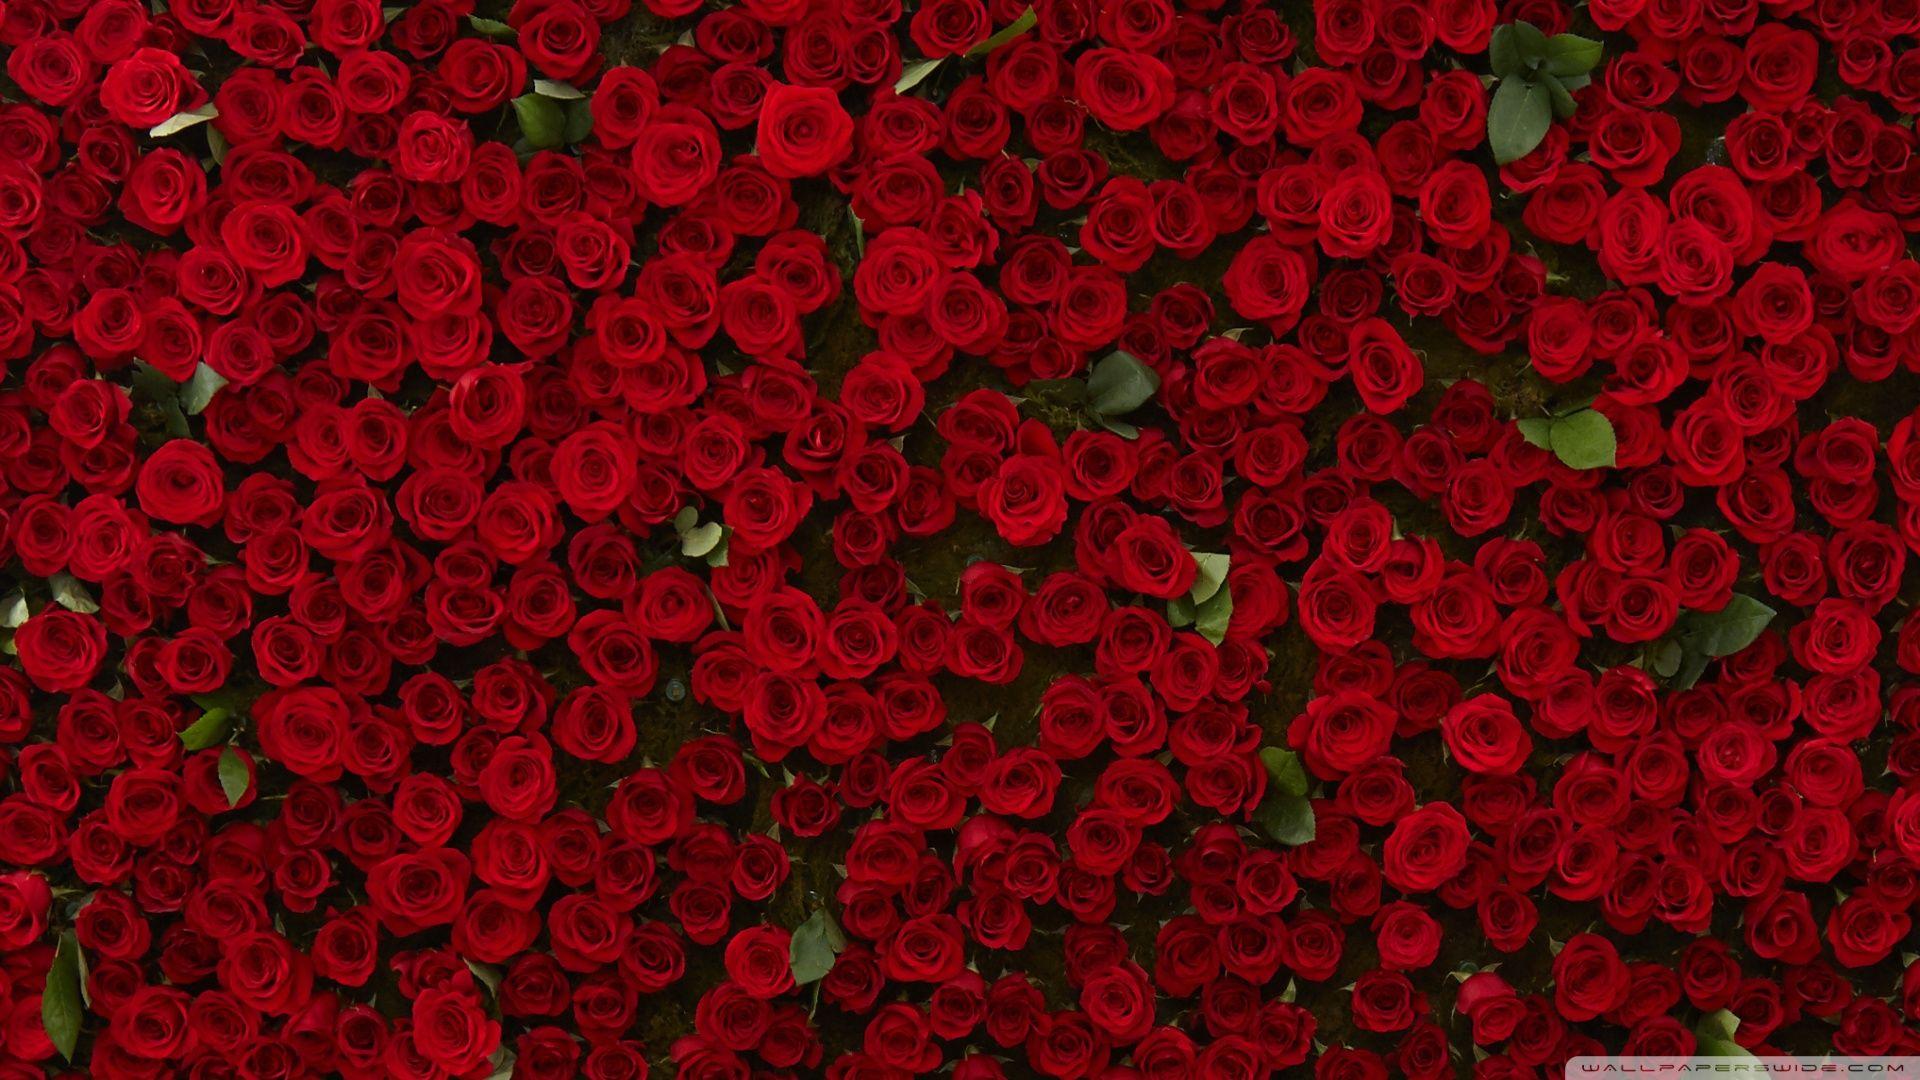 Many Red Roses ❤ 4K HD Desktop Wallpaper for 4K Ultra HD TV • Wide